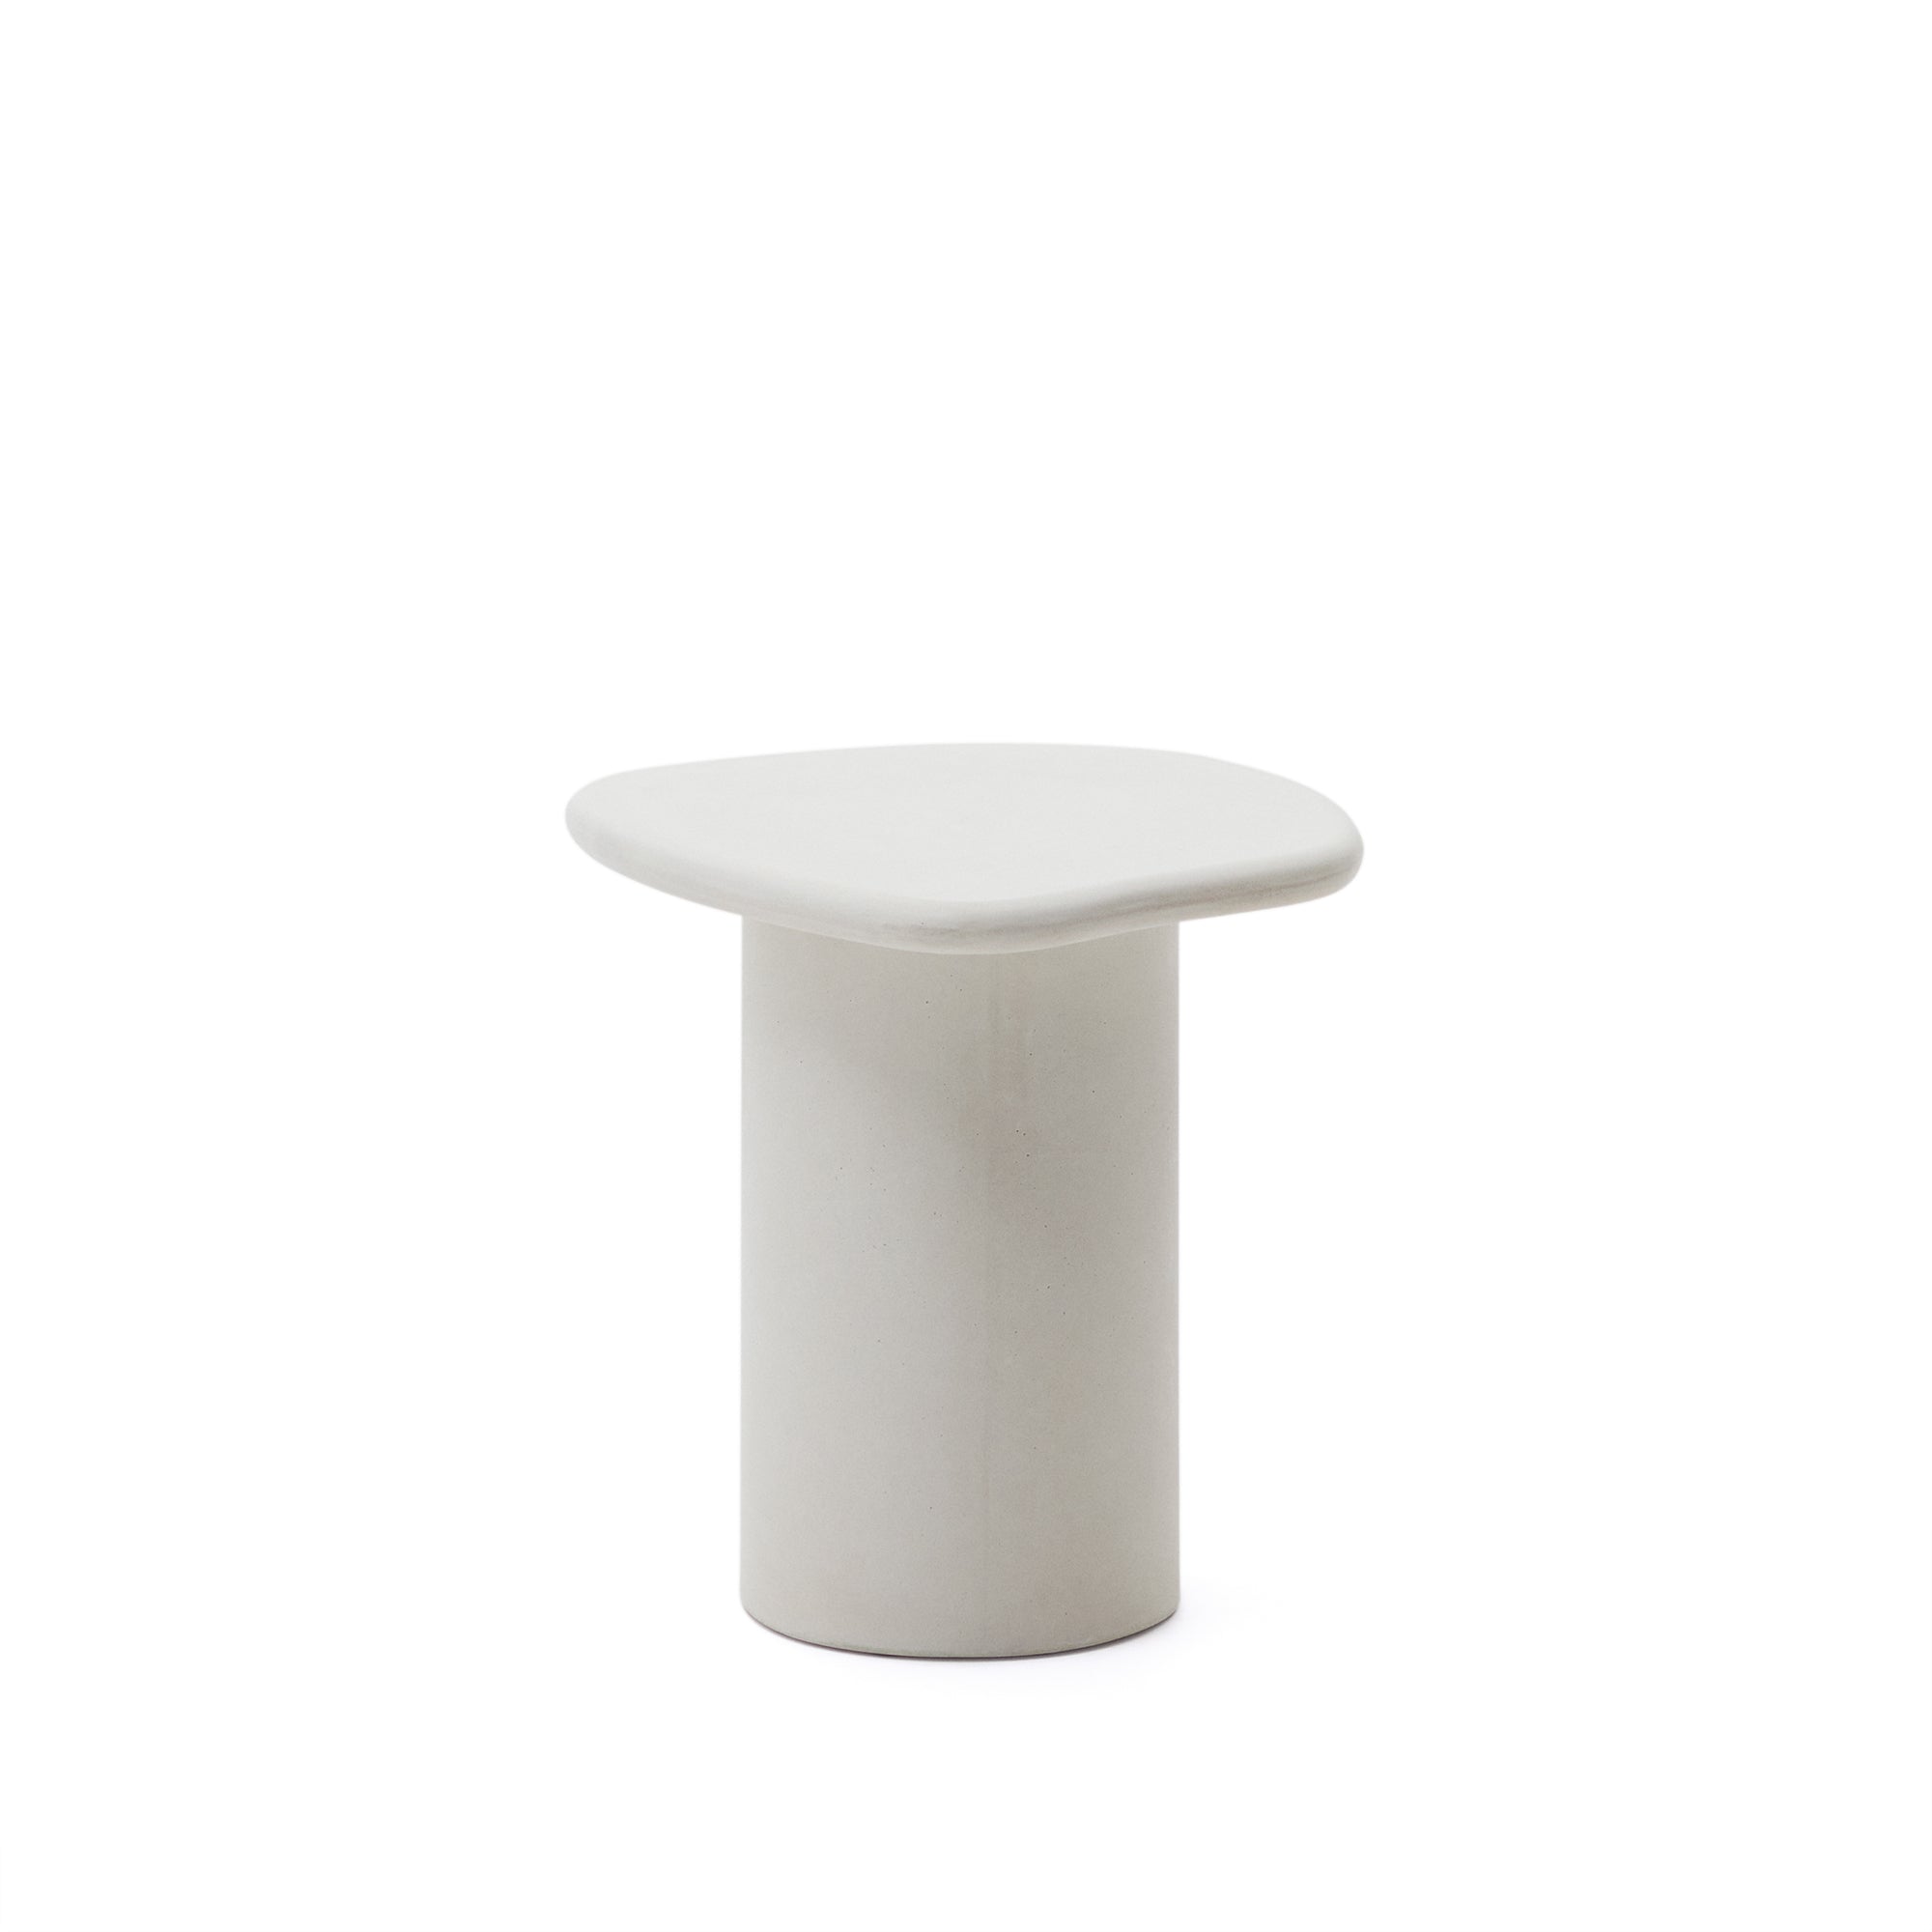 Macarella white cement side table, 48 x 47 cm